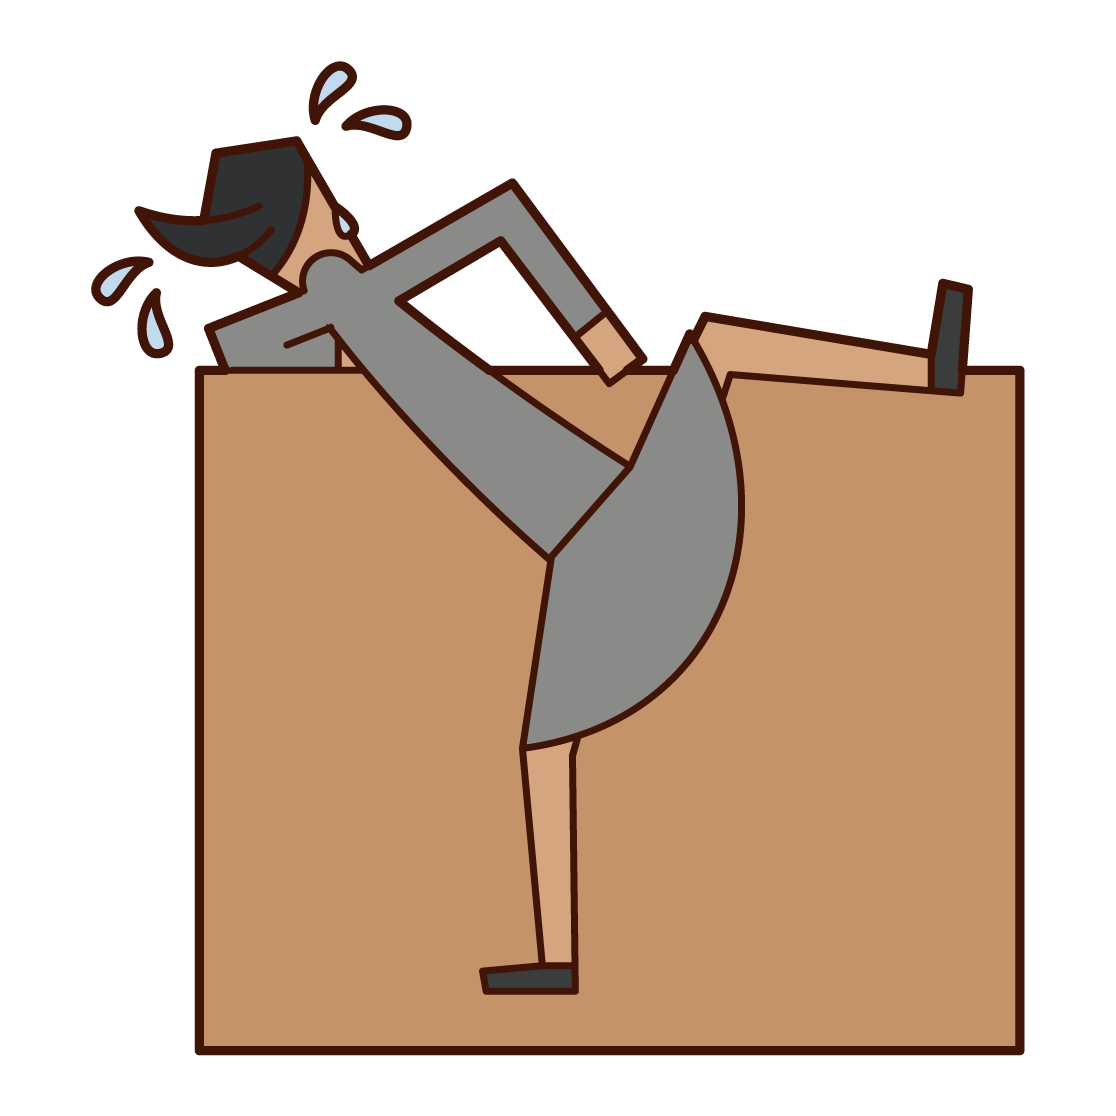 Illustration of a woman climbing a wall